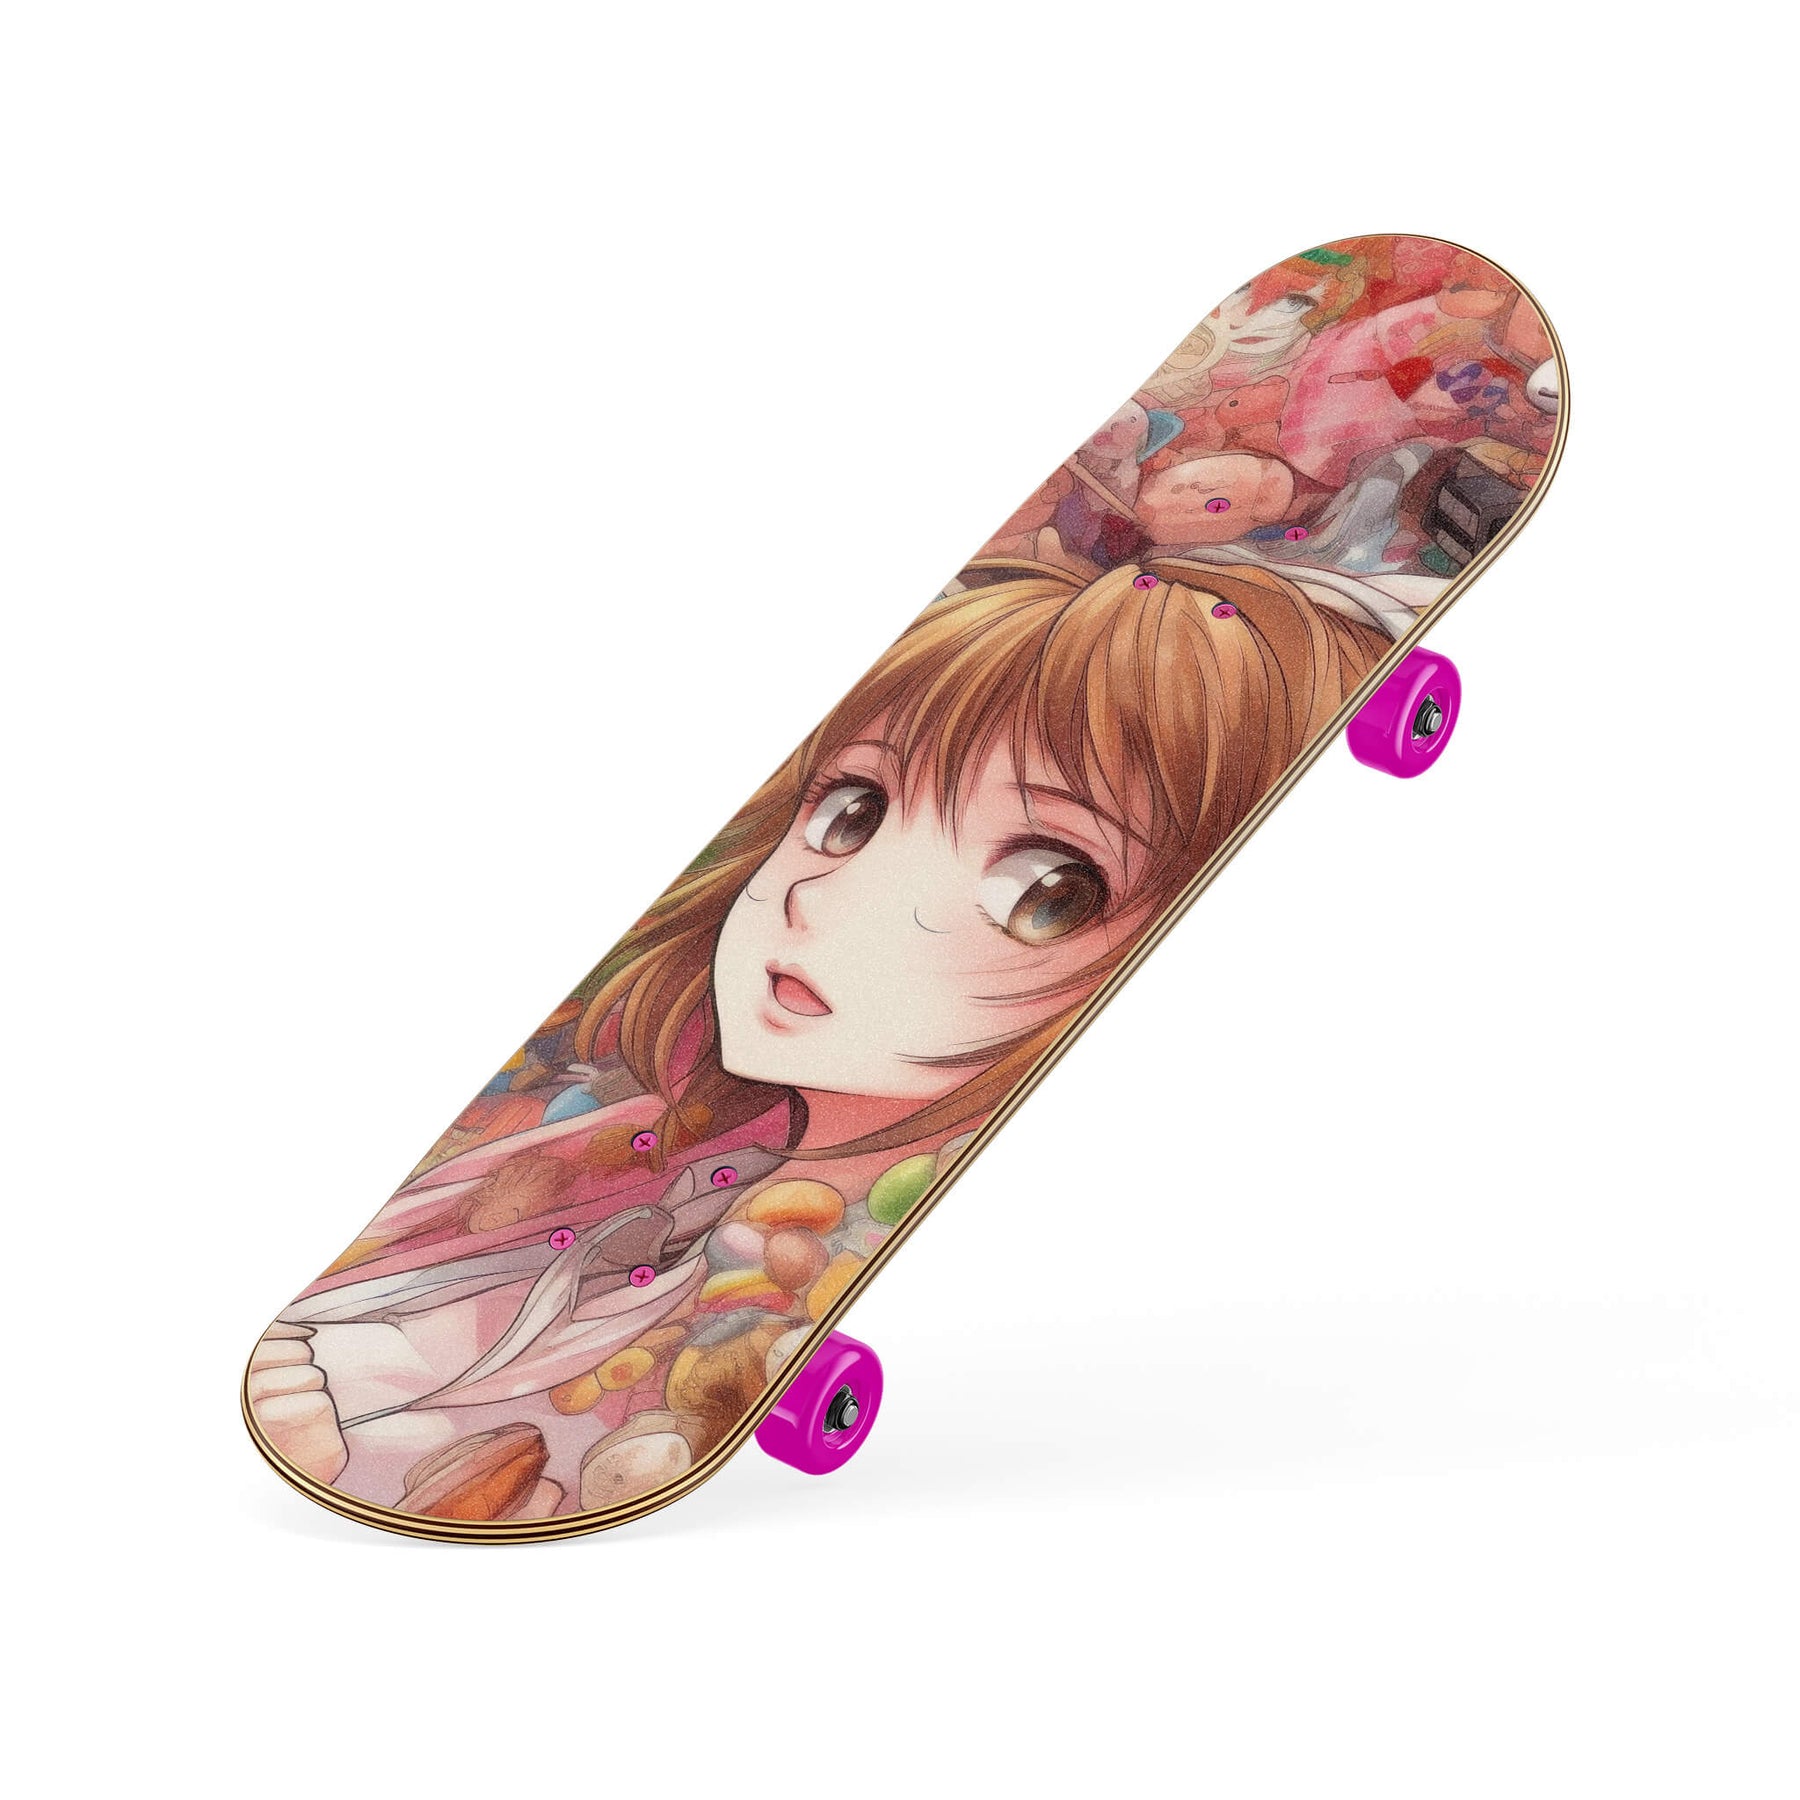 Anime Skateboard Grip Tape  Unleash Your Inner Otaku Anime  Jessup   ArdorPrinting